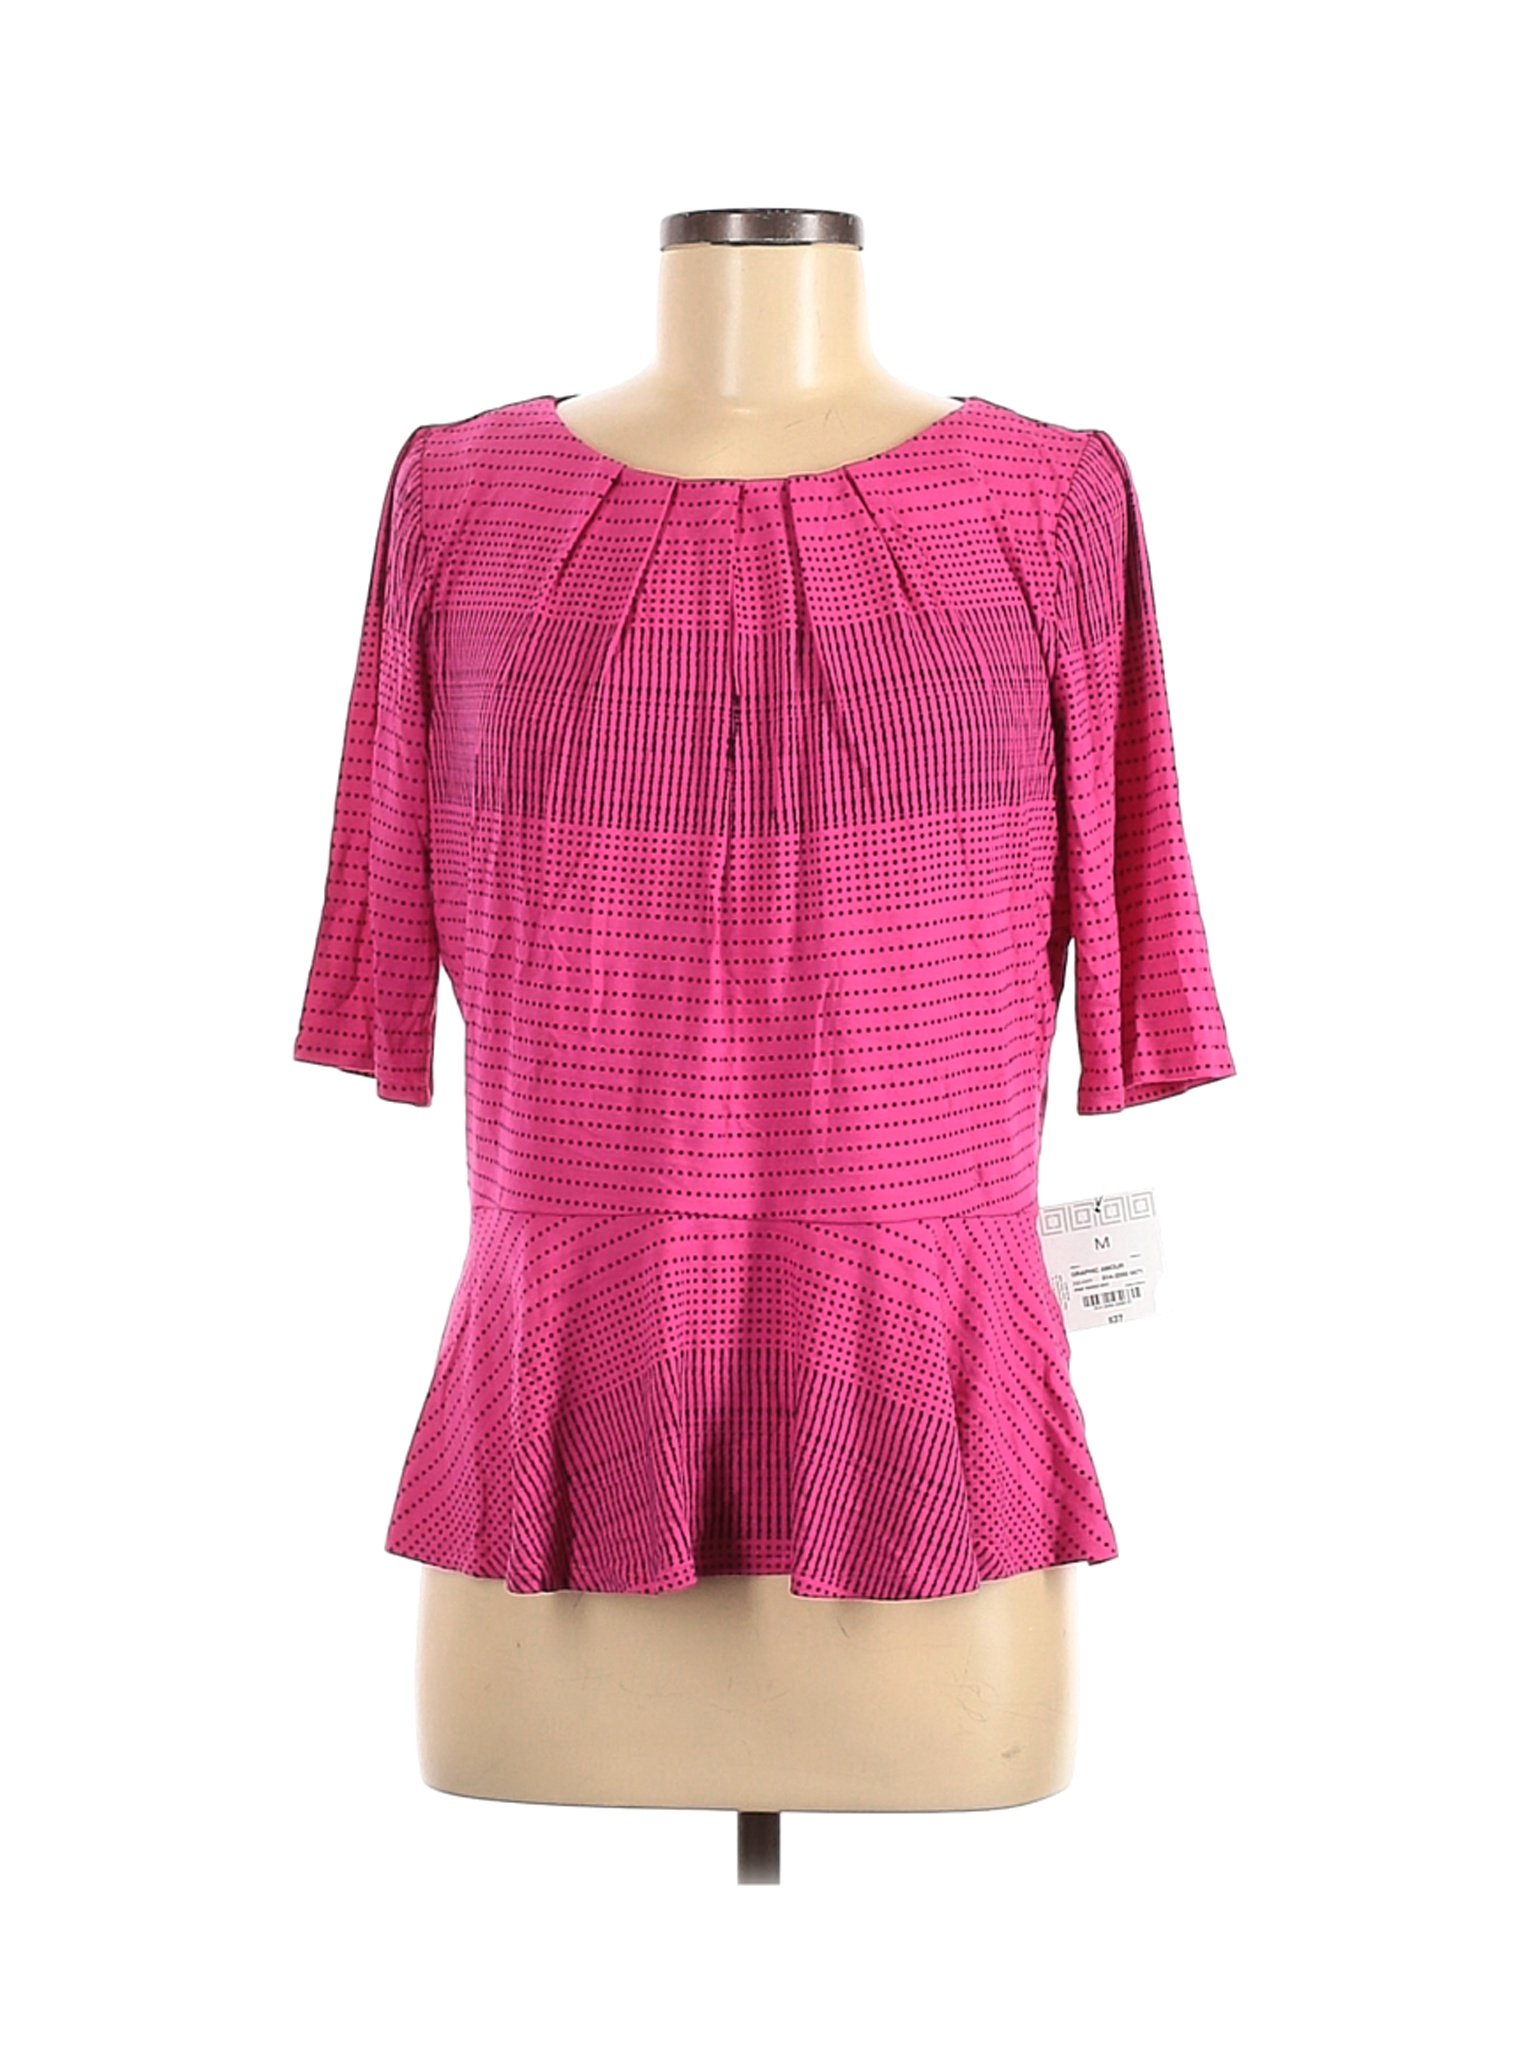 NWT Liz Claiborne Women Pink Short Sleeve Top M | eBay